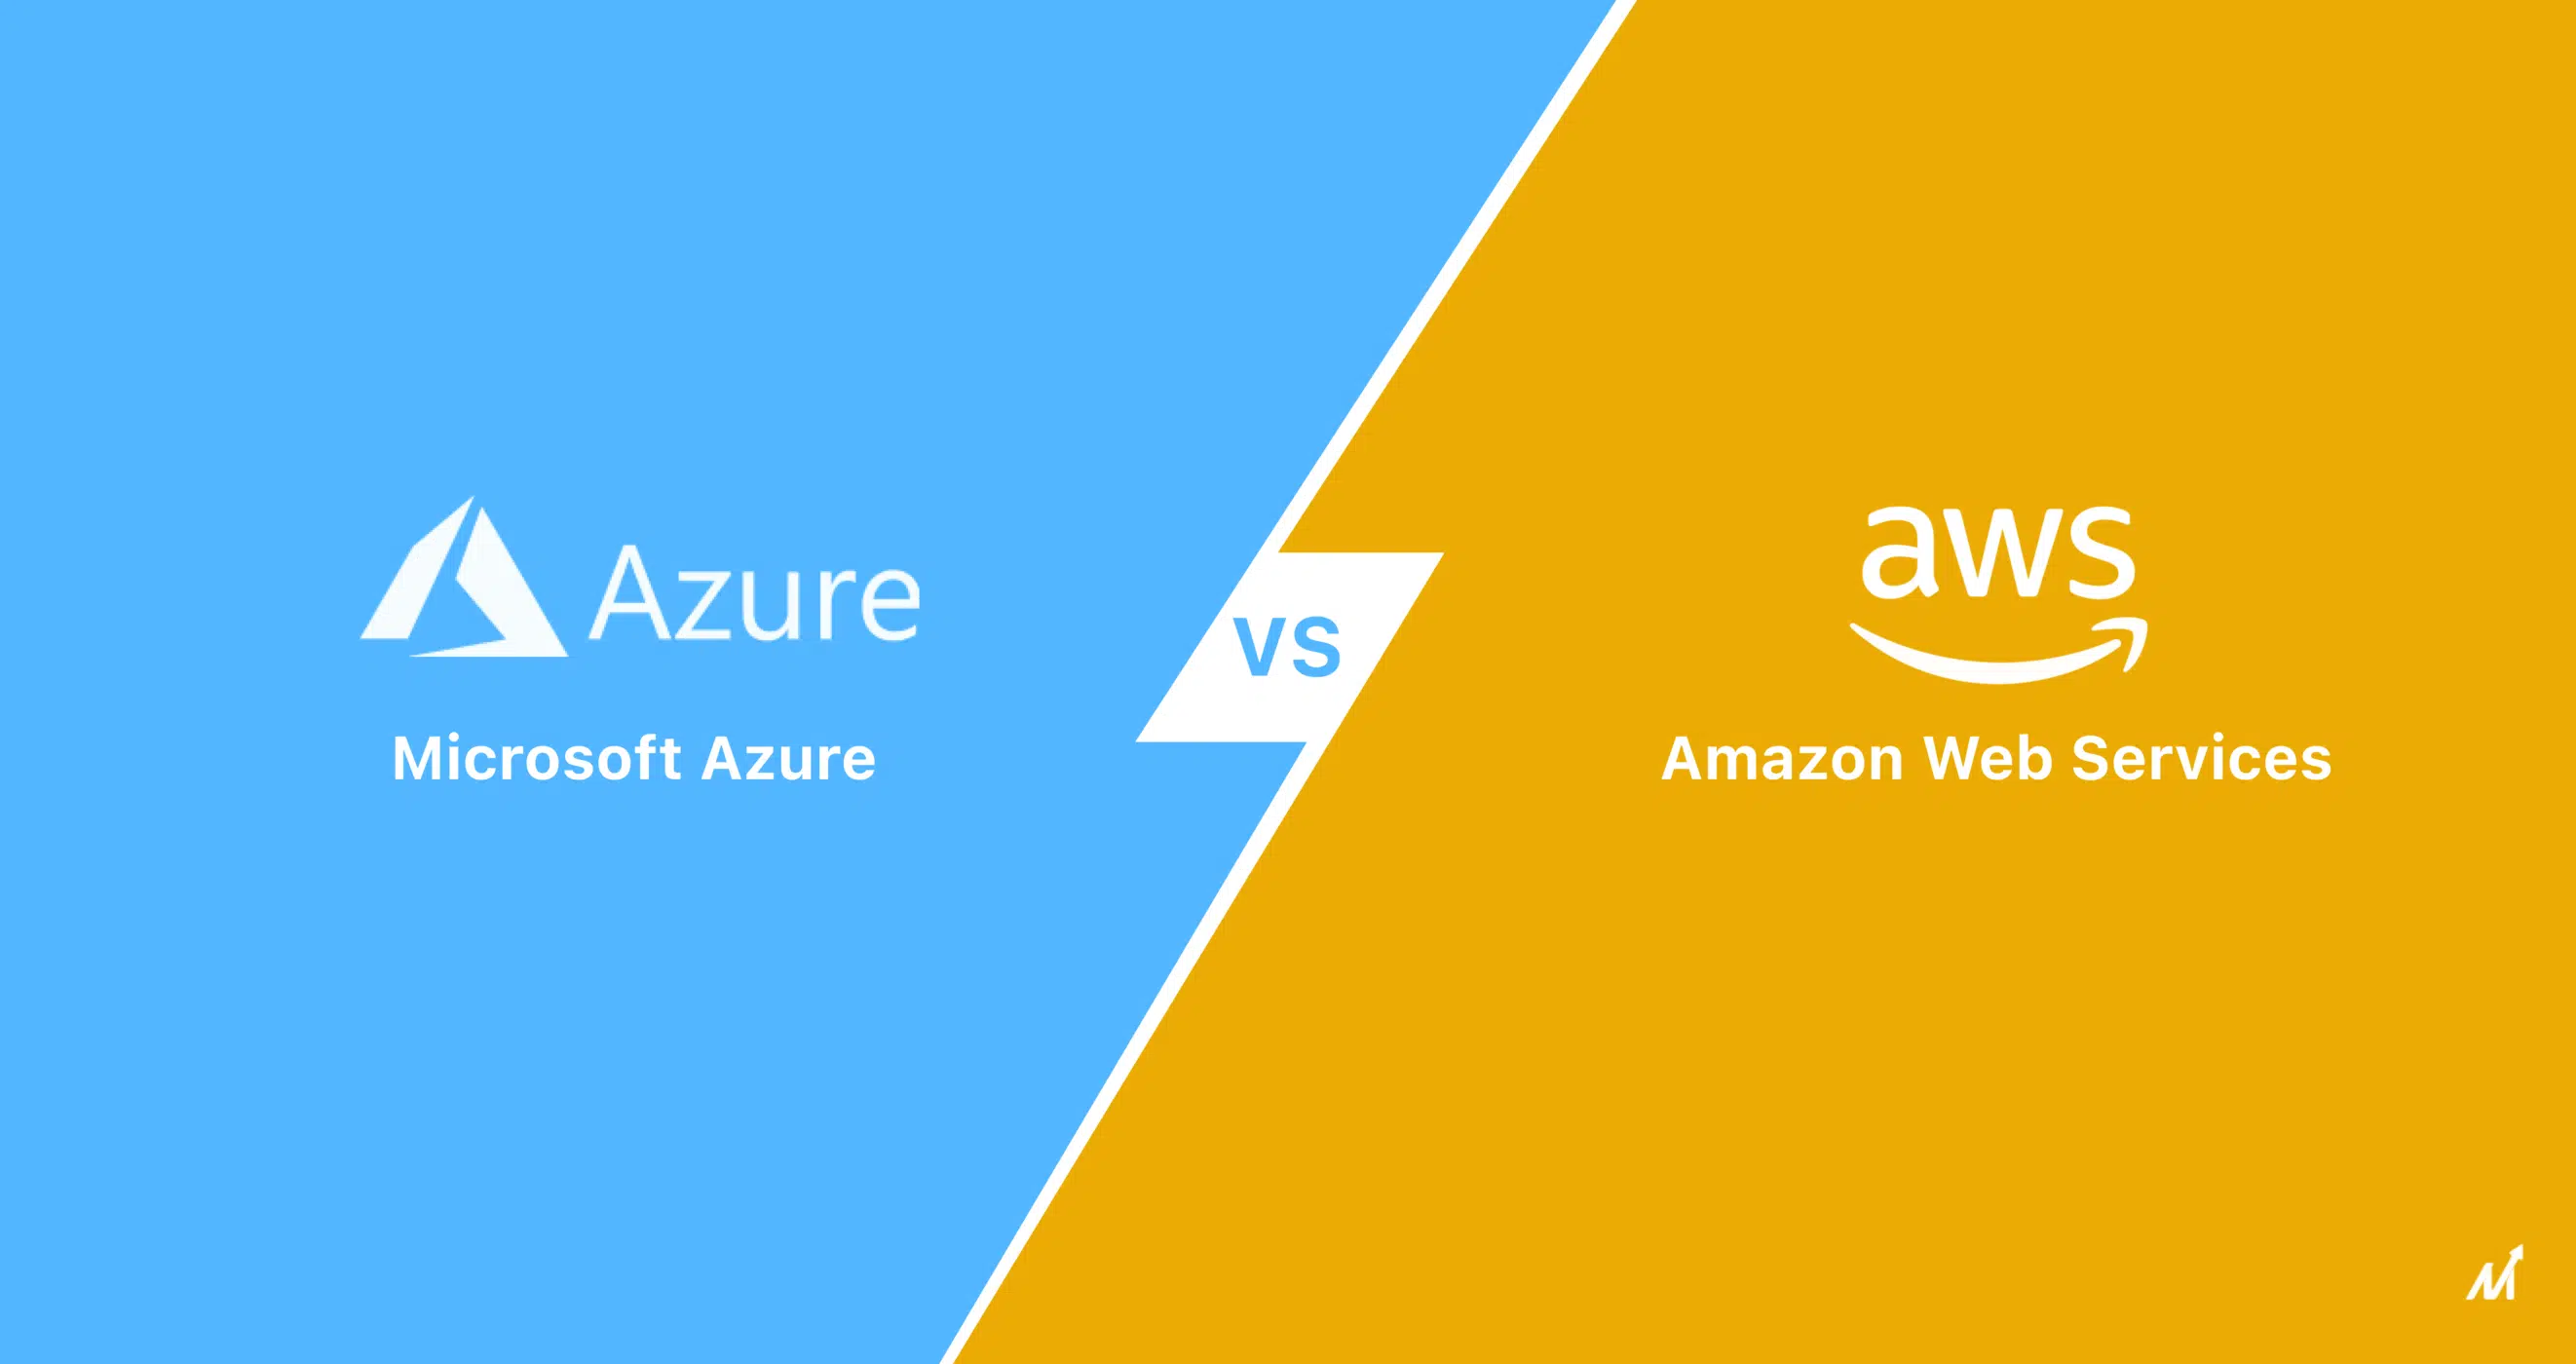 AWS vs Azure: What You Should Choose For Enterprise App Development?